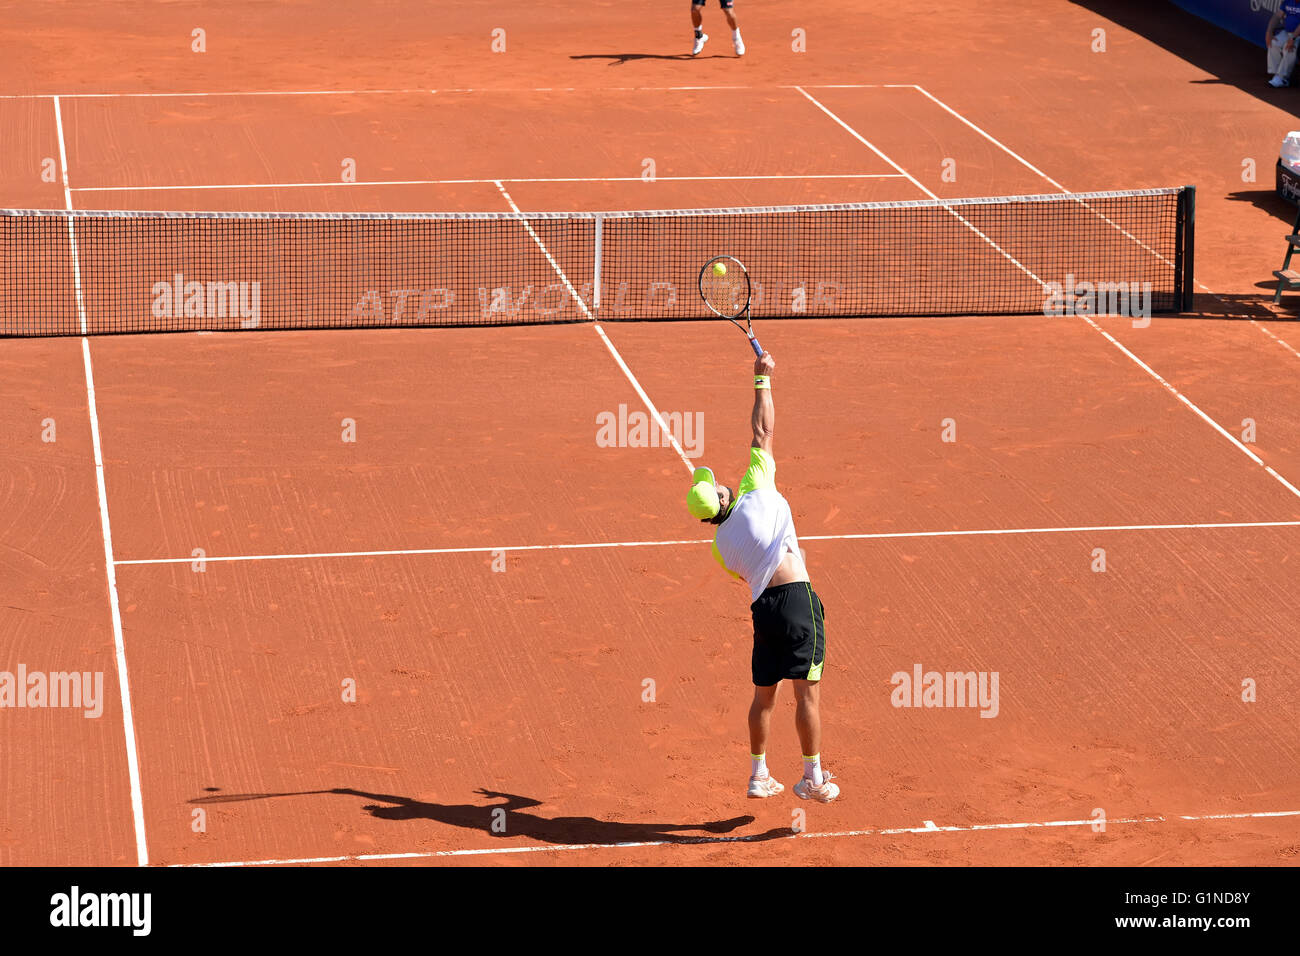 BARCELONA - 21 APR: Teymuraz Gabashvili (Tennisspieler aus Russland) spielt bei der ATP Barcelona Open Banc Sabadell. Stockfoto